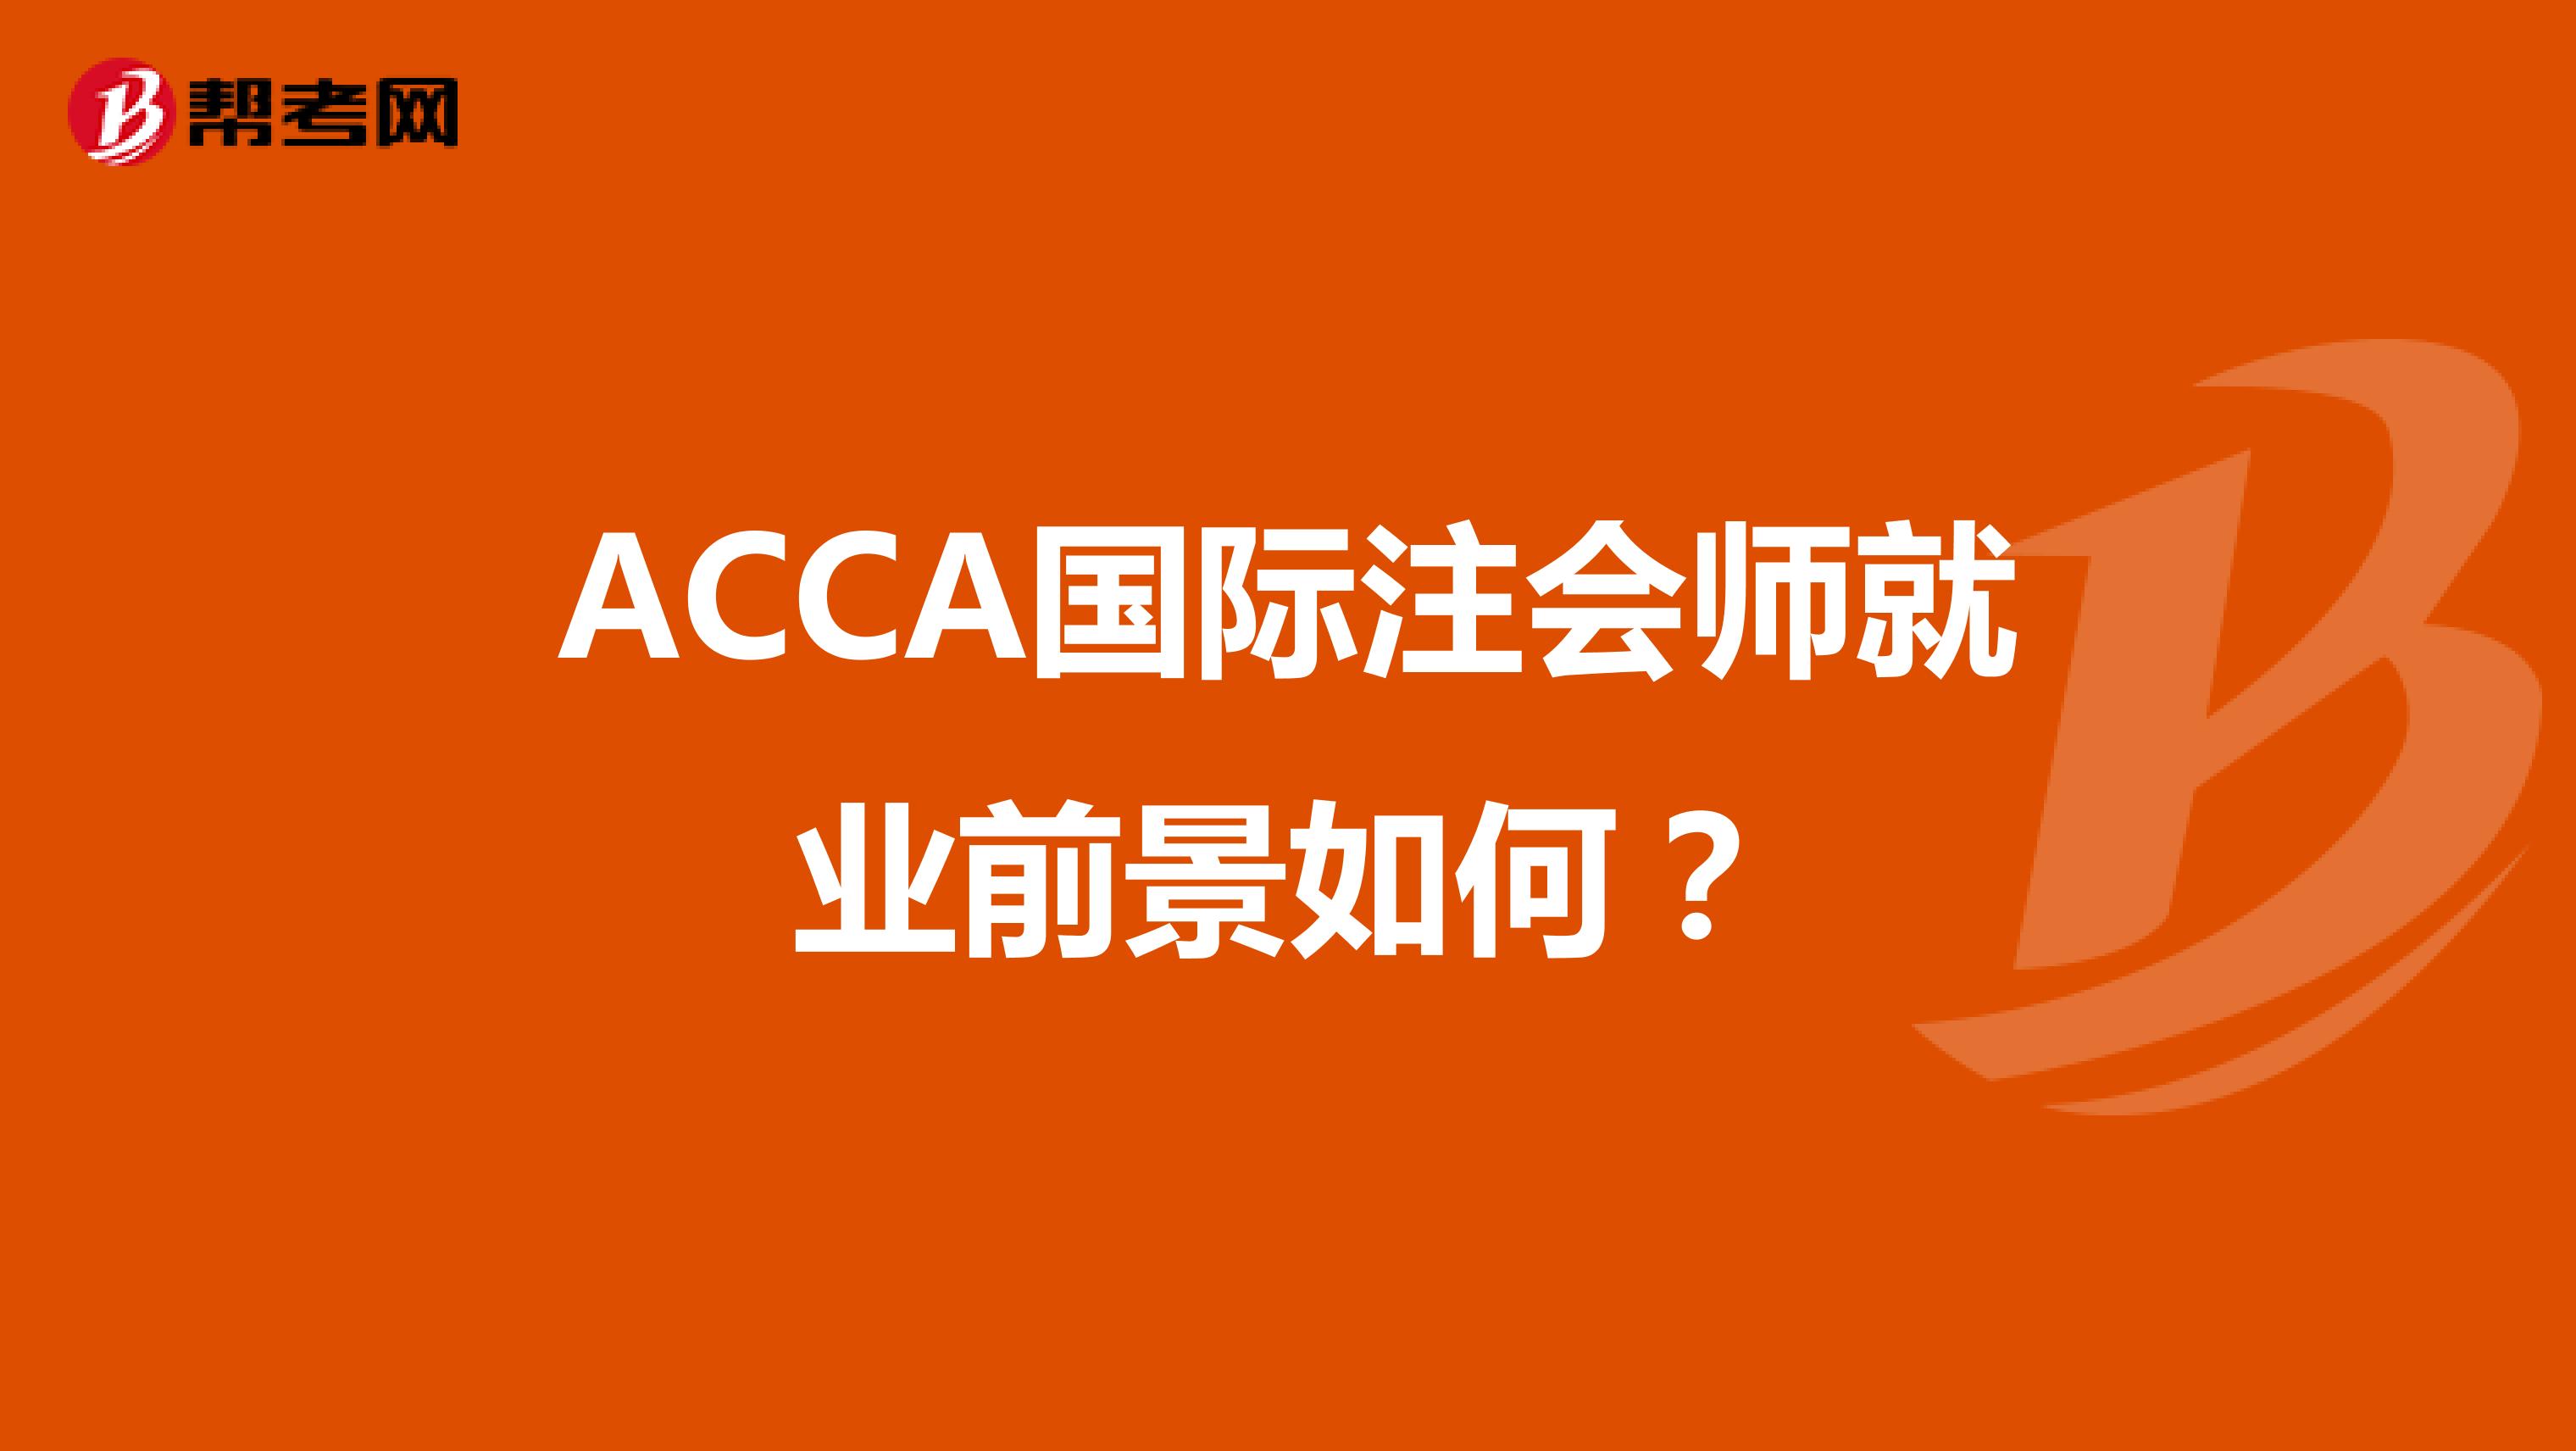 ACCA国际注会师就业前景如何？